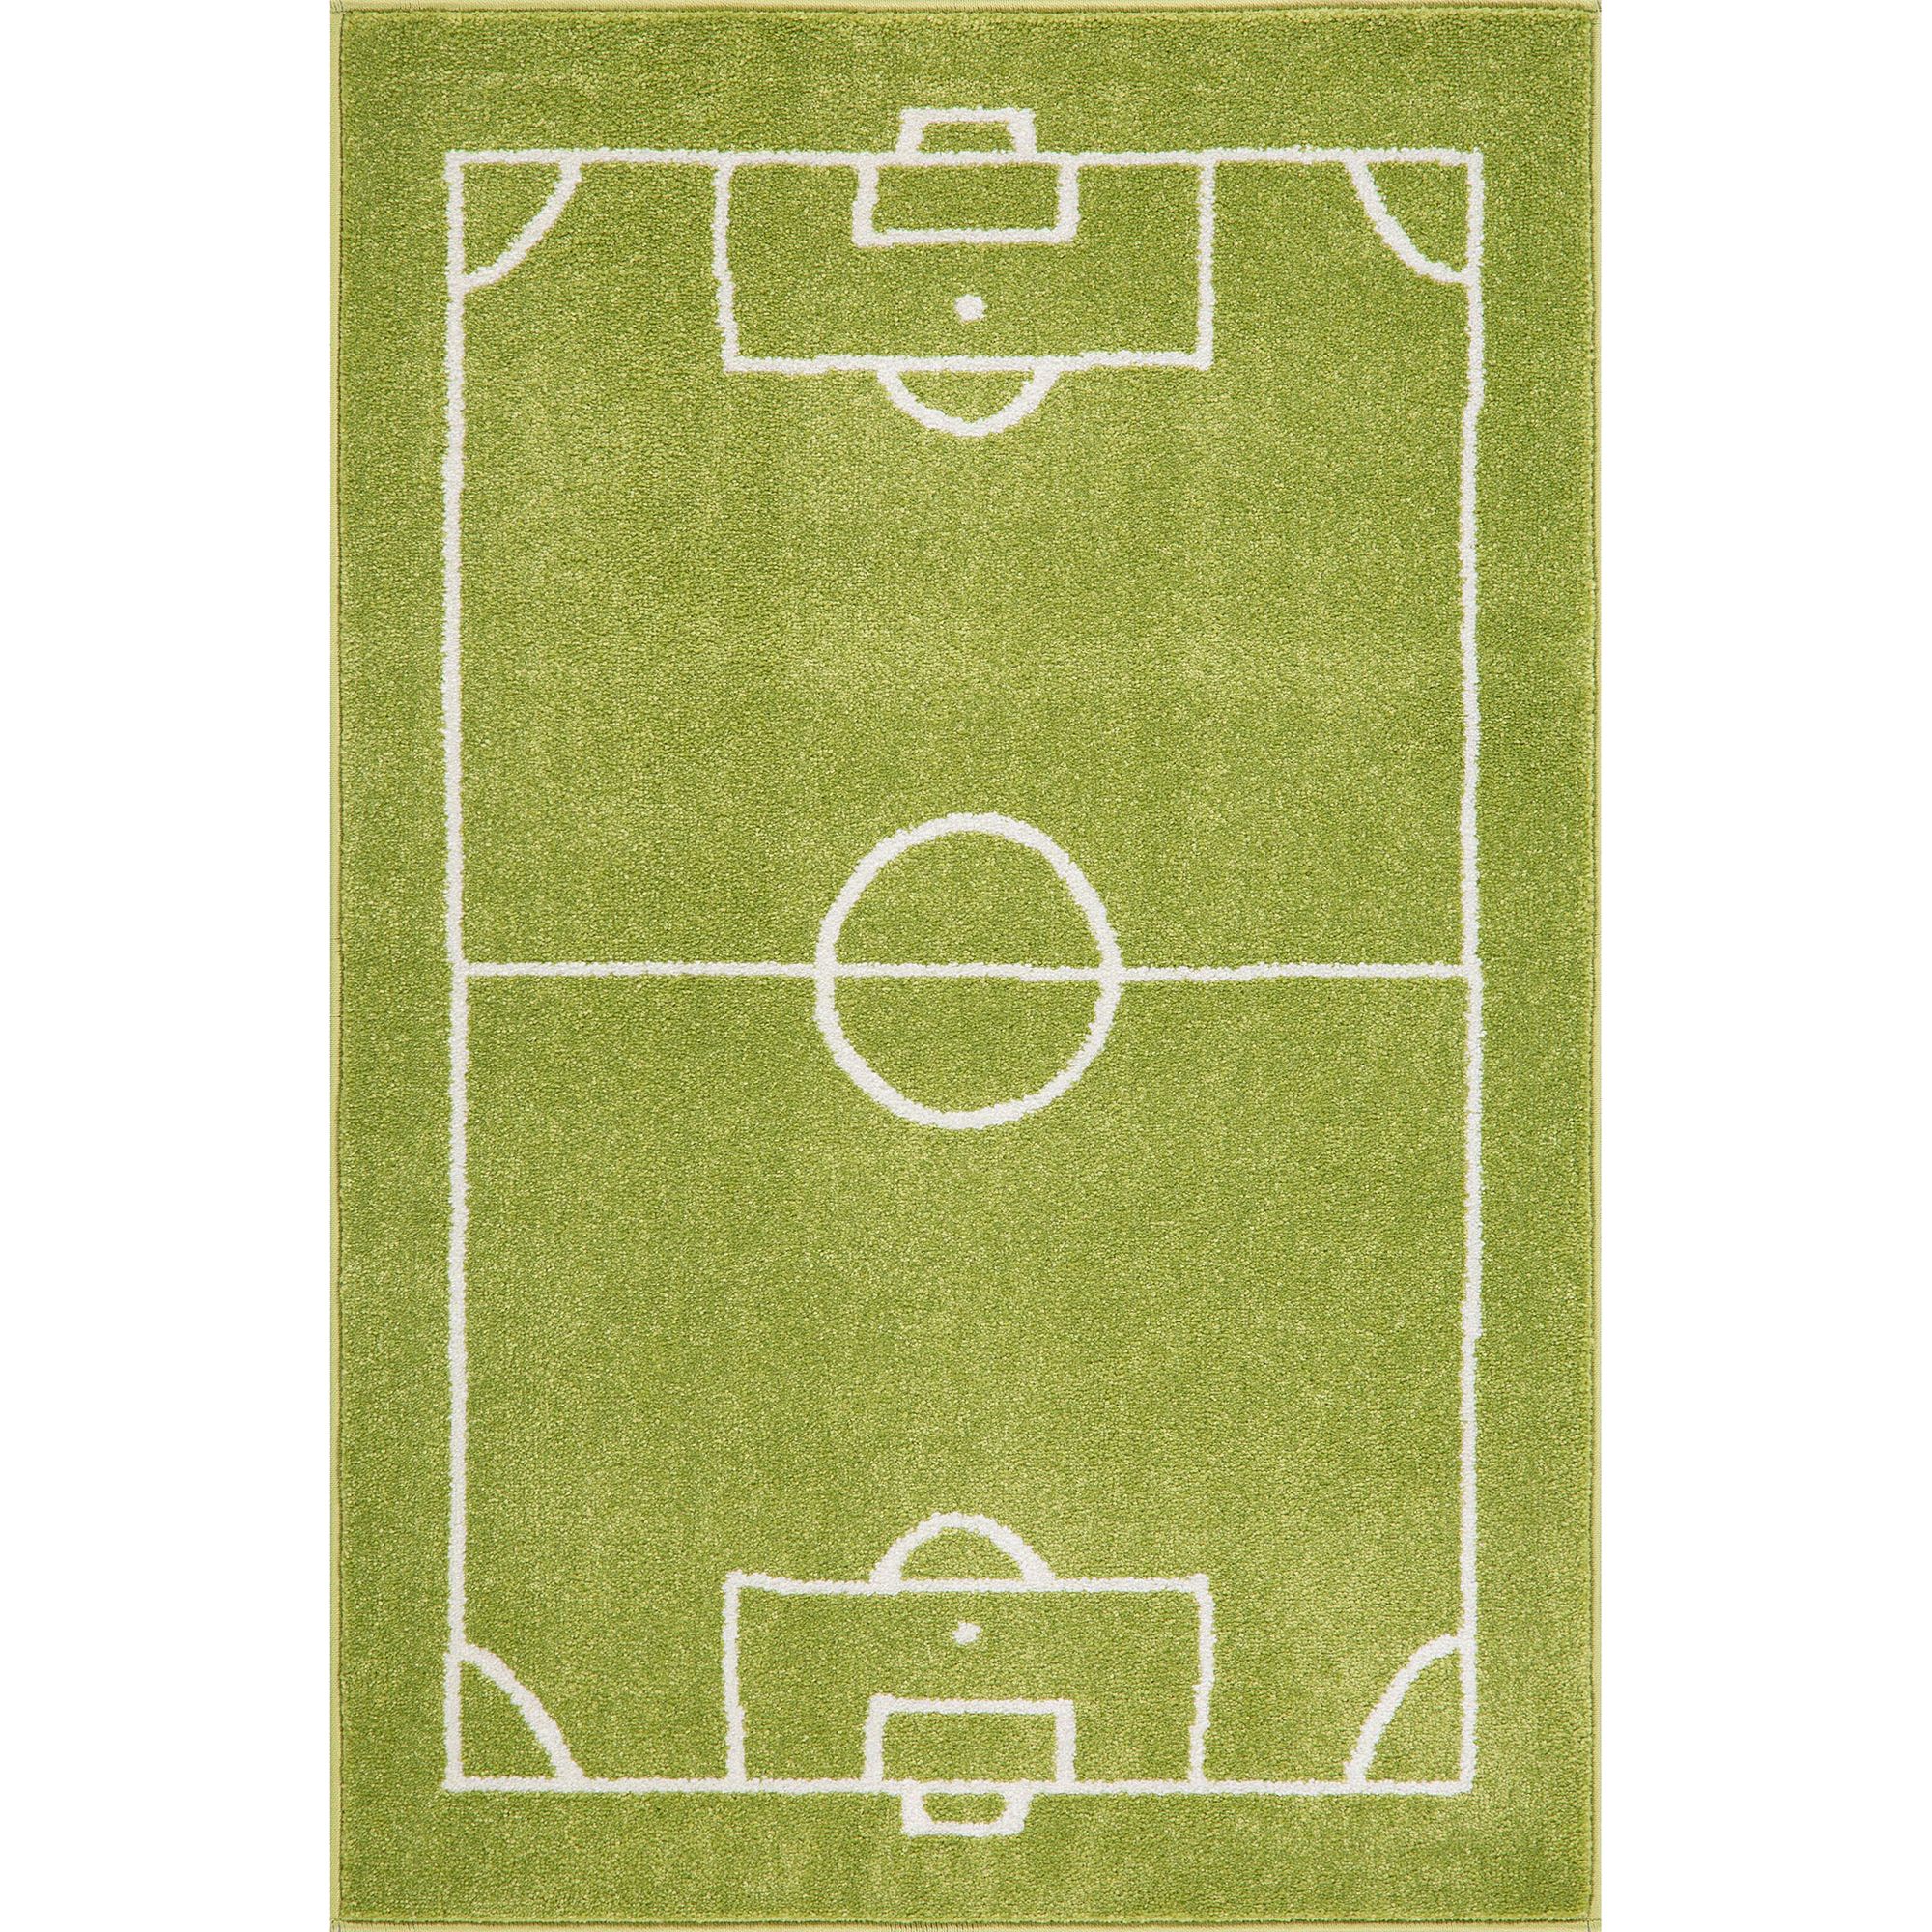 Football pitch Playmat, (W) 80cm x (L) 120cm